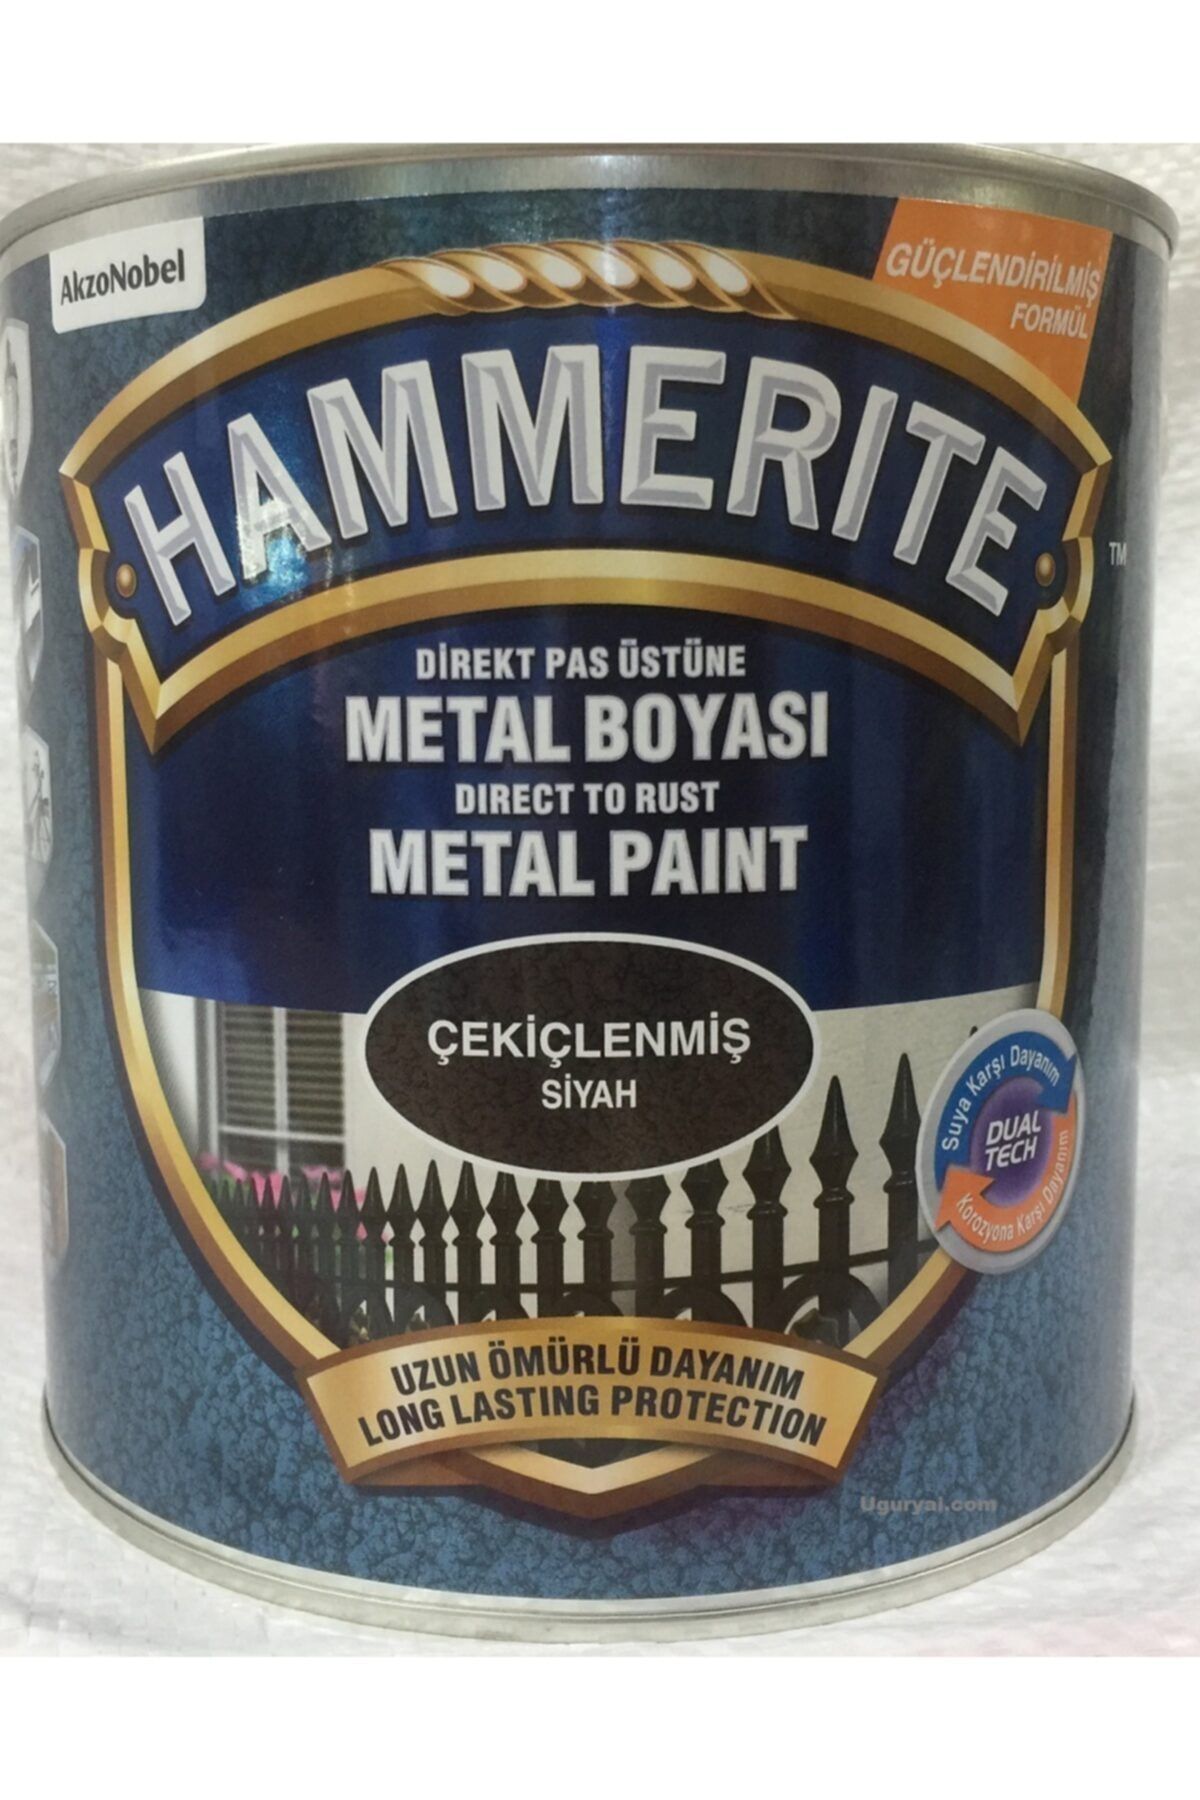 Hammerite rust фото 107